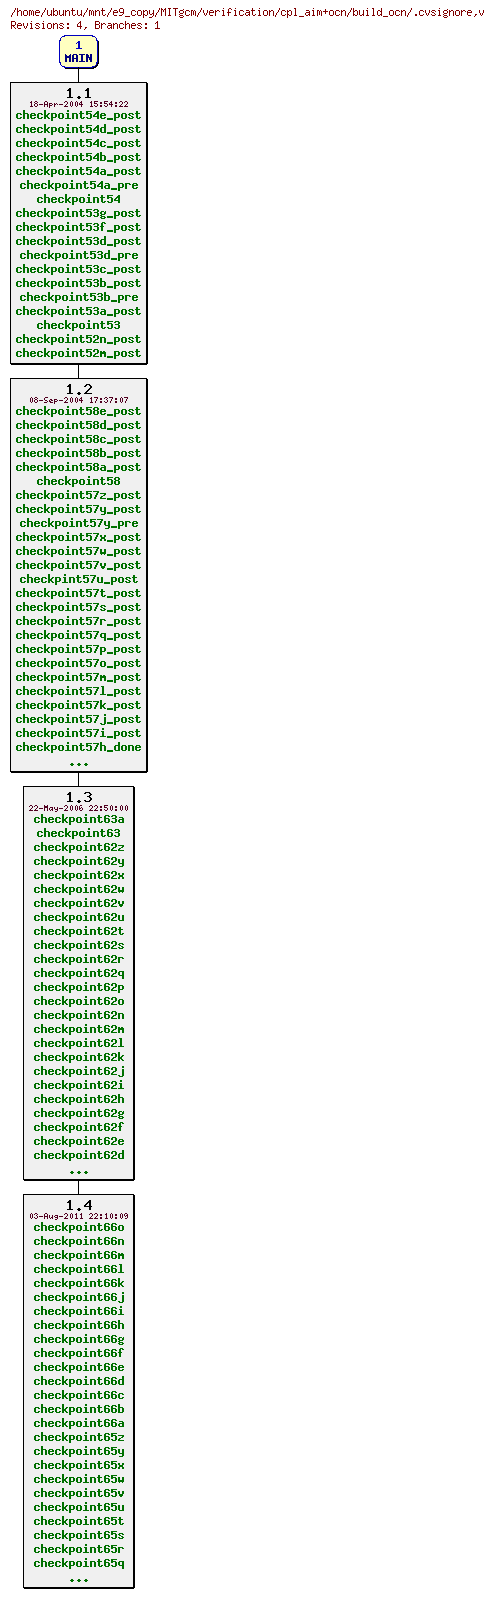 Revisions of MITgcm/verification/cpl_aim+ocn/build_ocn/.cvsignore